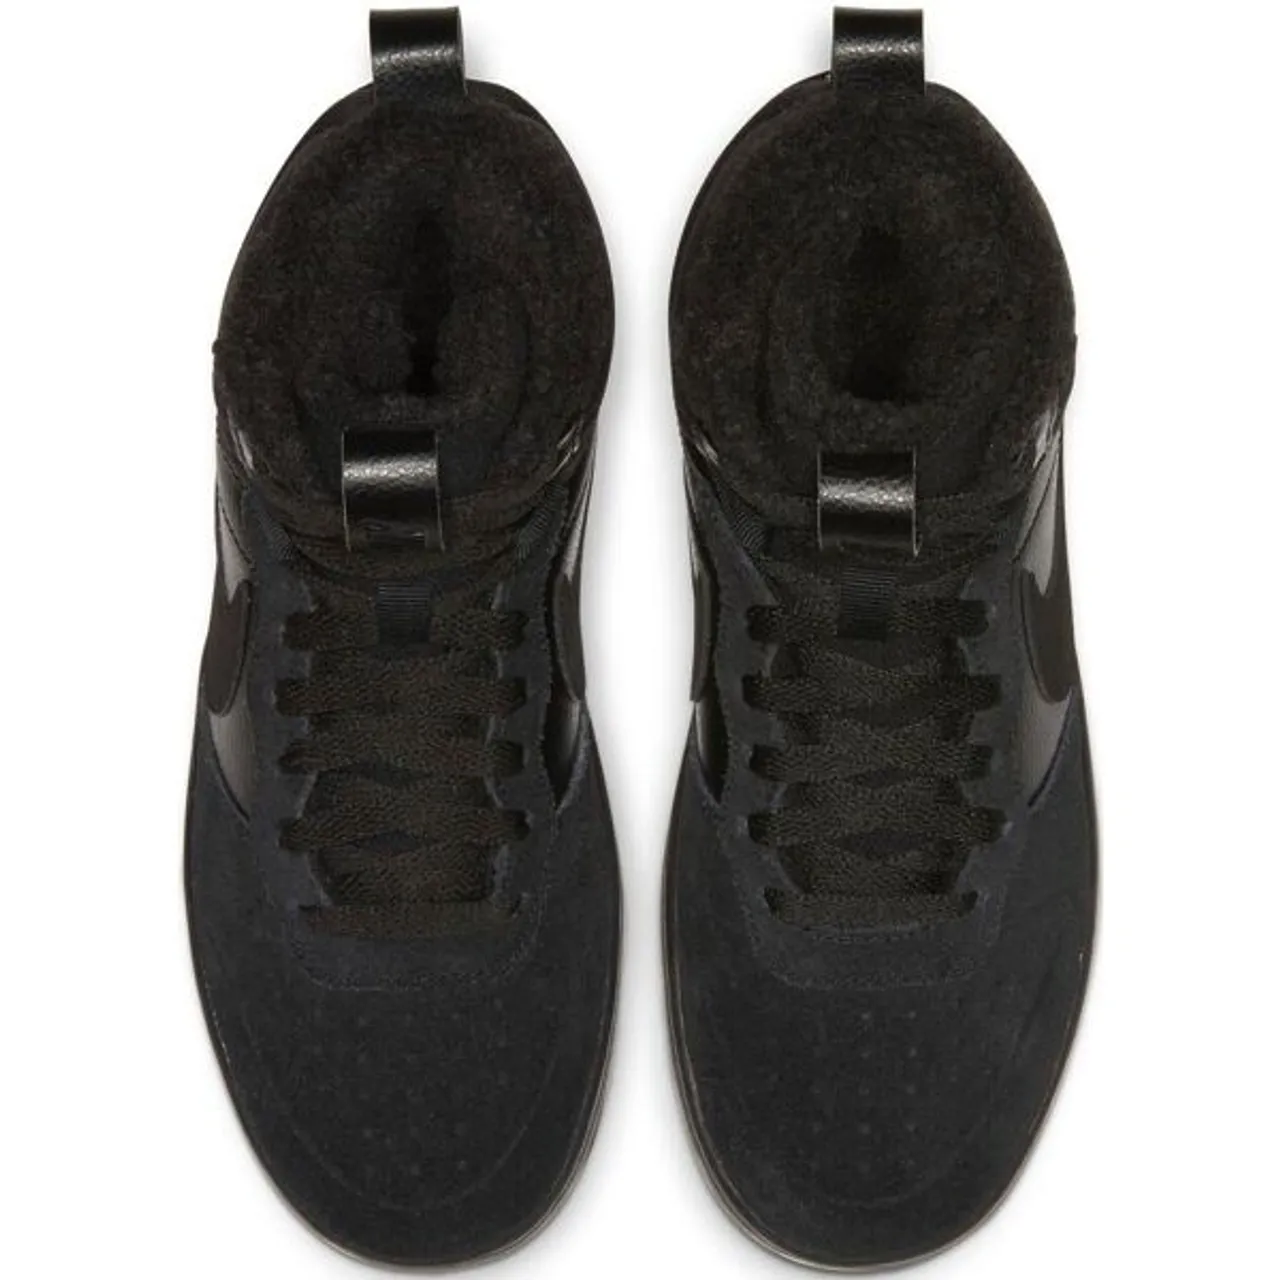 Sneaker NIKE SPORTSWEAR "COURT BOROUGH MID 2 S (GS)" Gr. 35,5, schwarz Schuhe Basketballschuhe